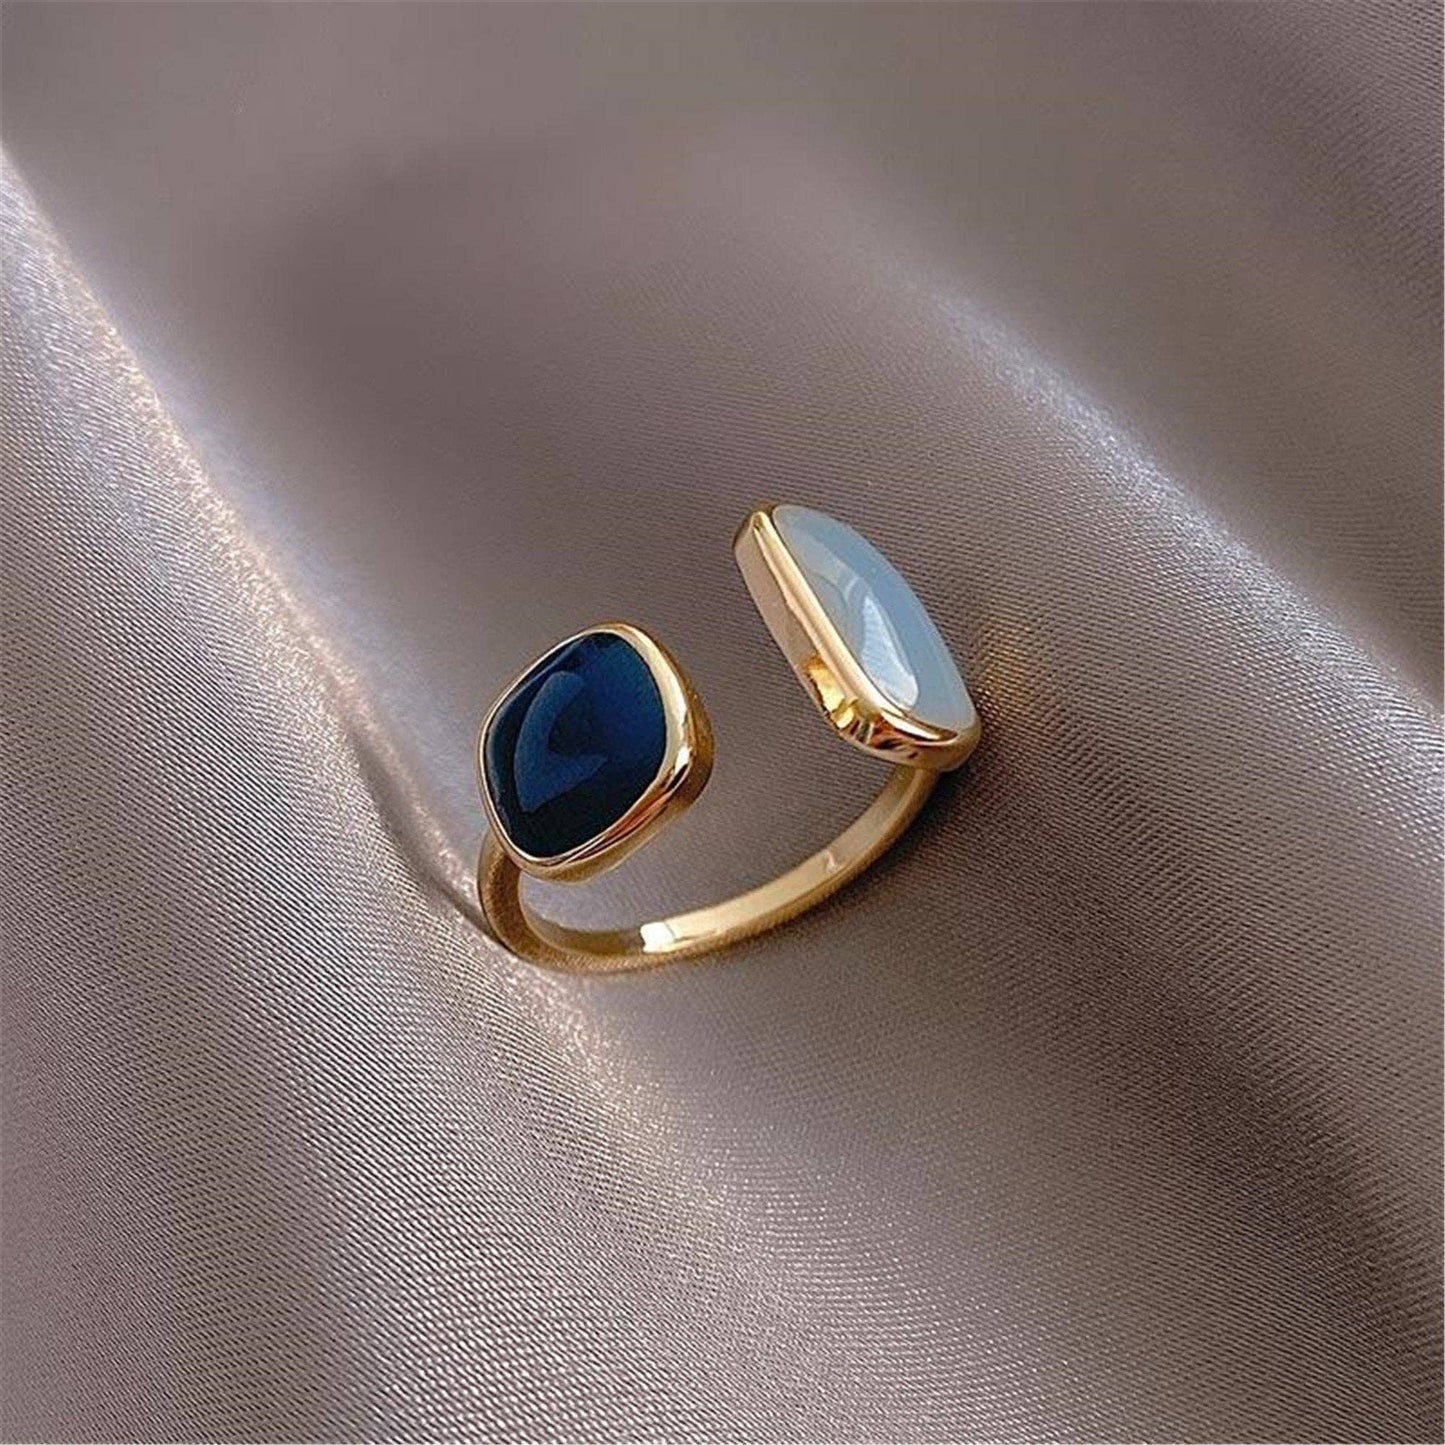 Stone Ring in Solid Copper, Enamel: Blue